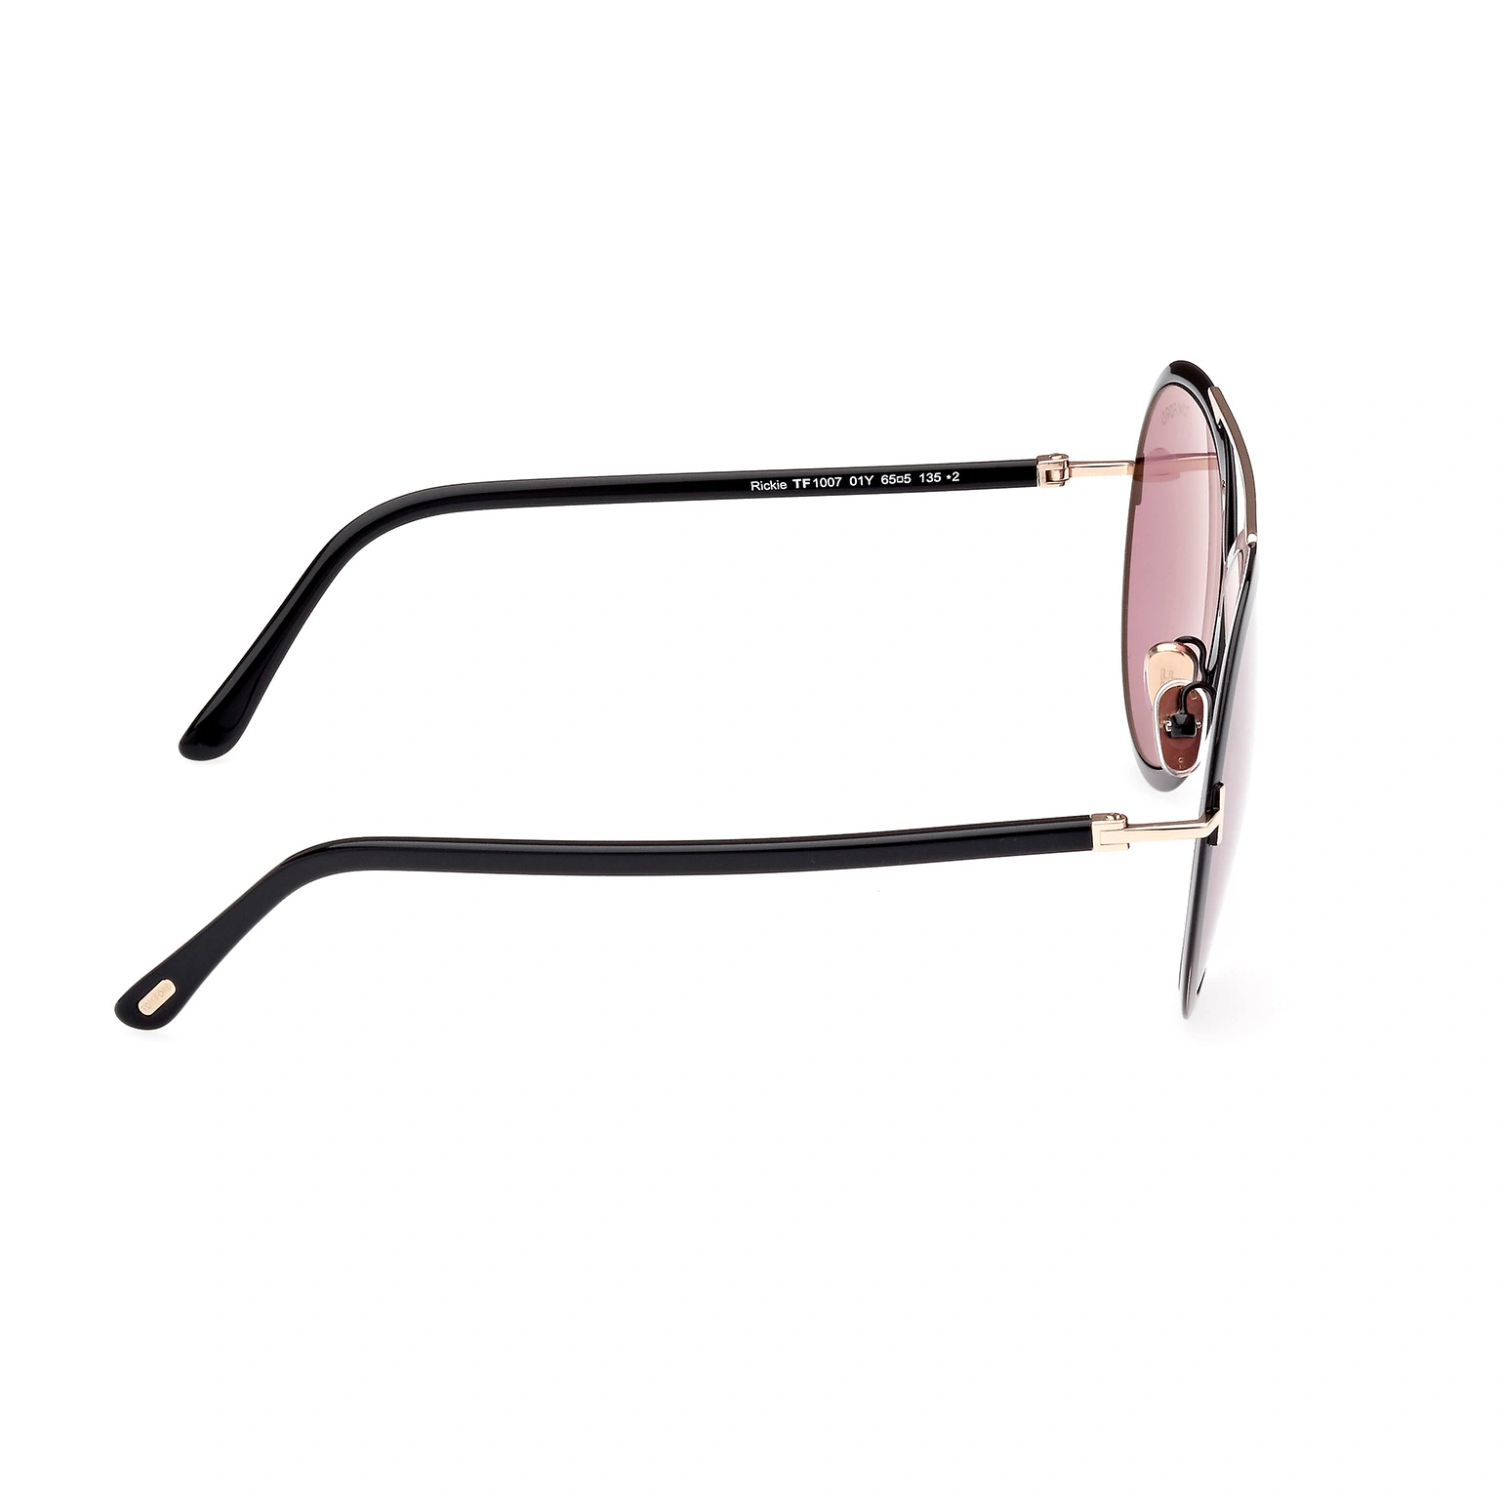 Tom Ford Sunglasses Tom Ford Sunglasses FT1007 01Y 65mm Rickie Eyeglasses Eyewear UK USA Australia 